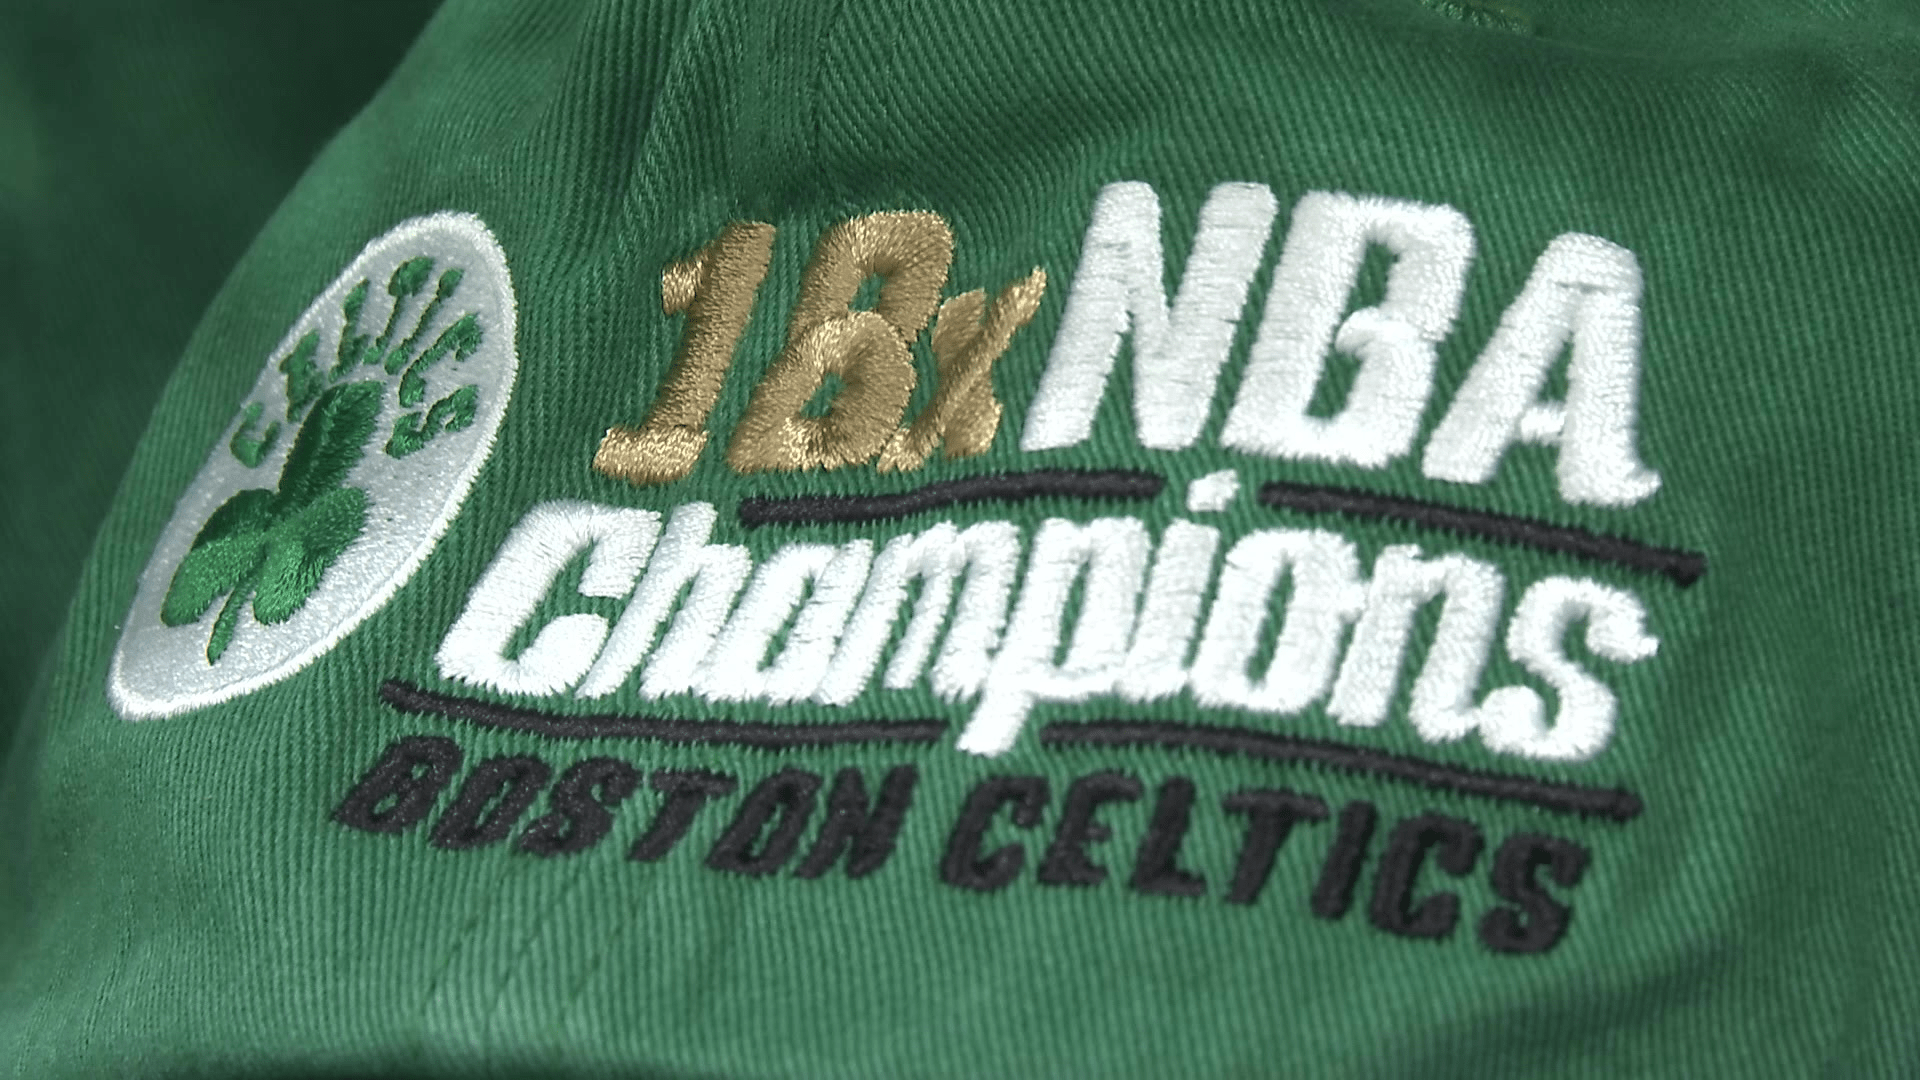 Boston Celtics championship gear